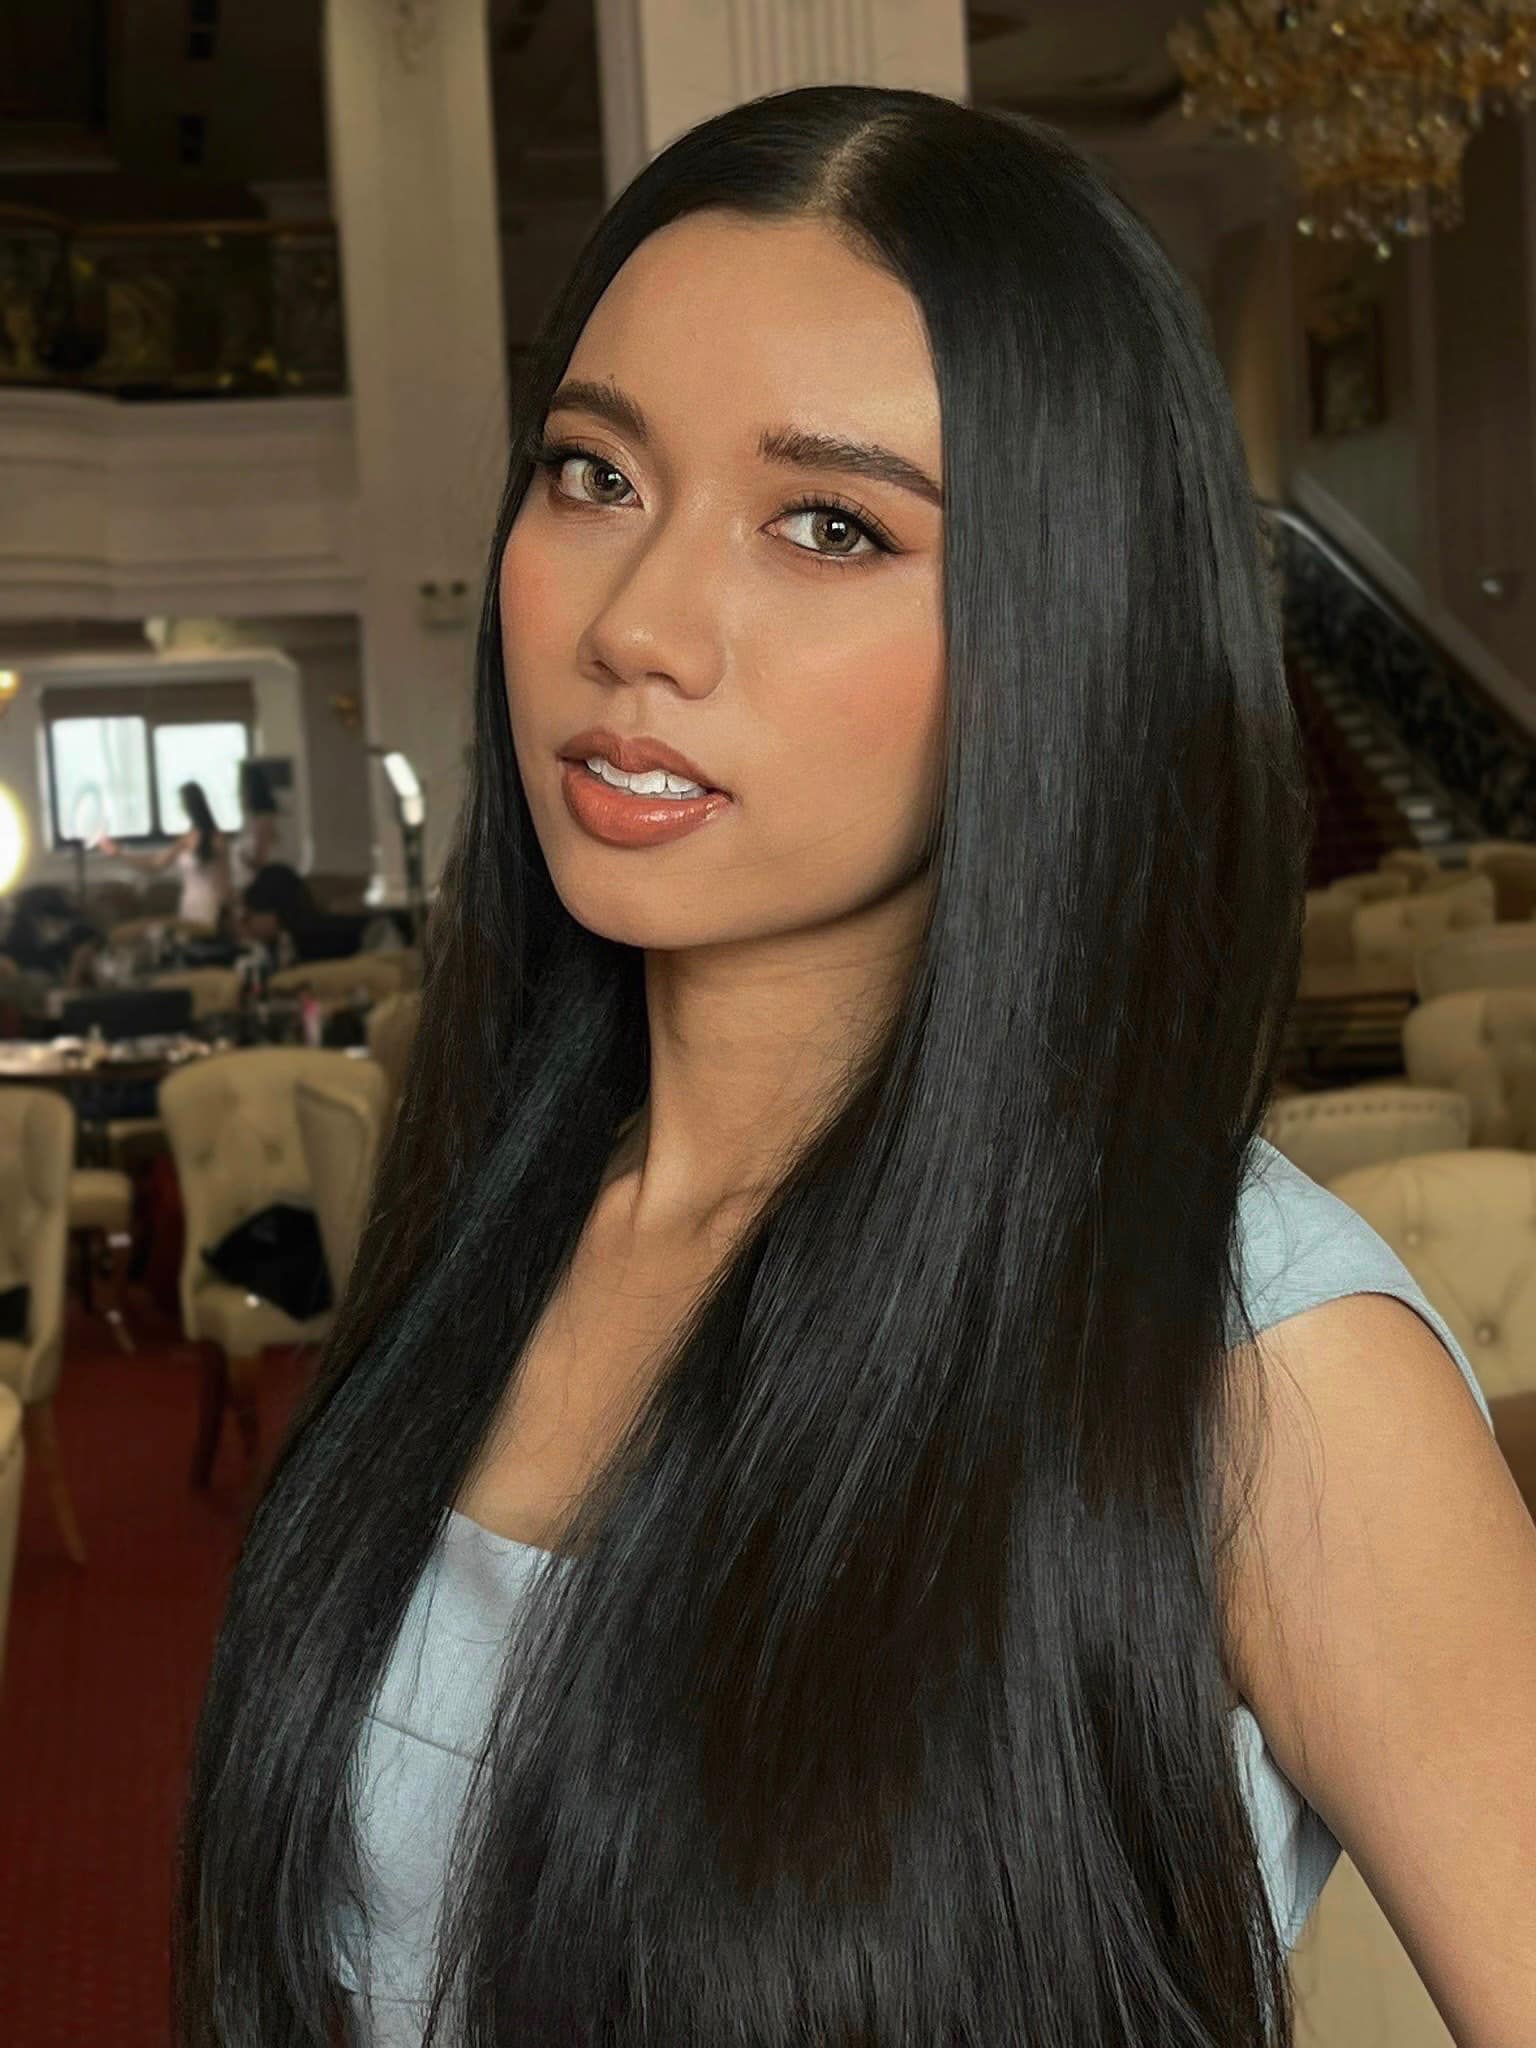 Miss World Việt Nam 2022 